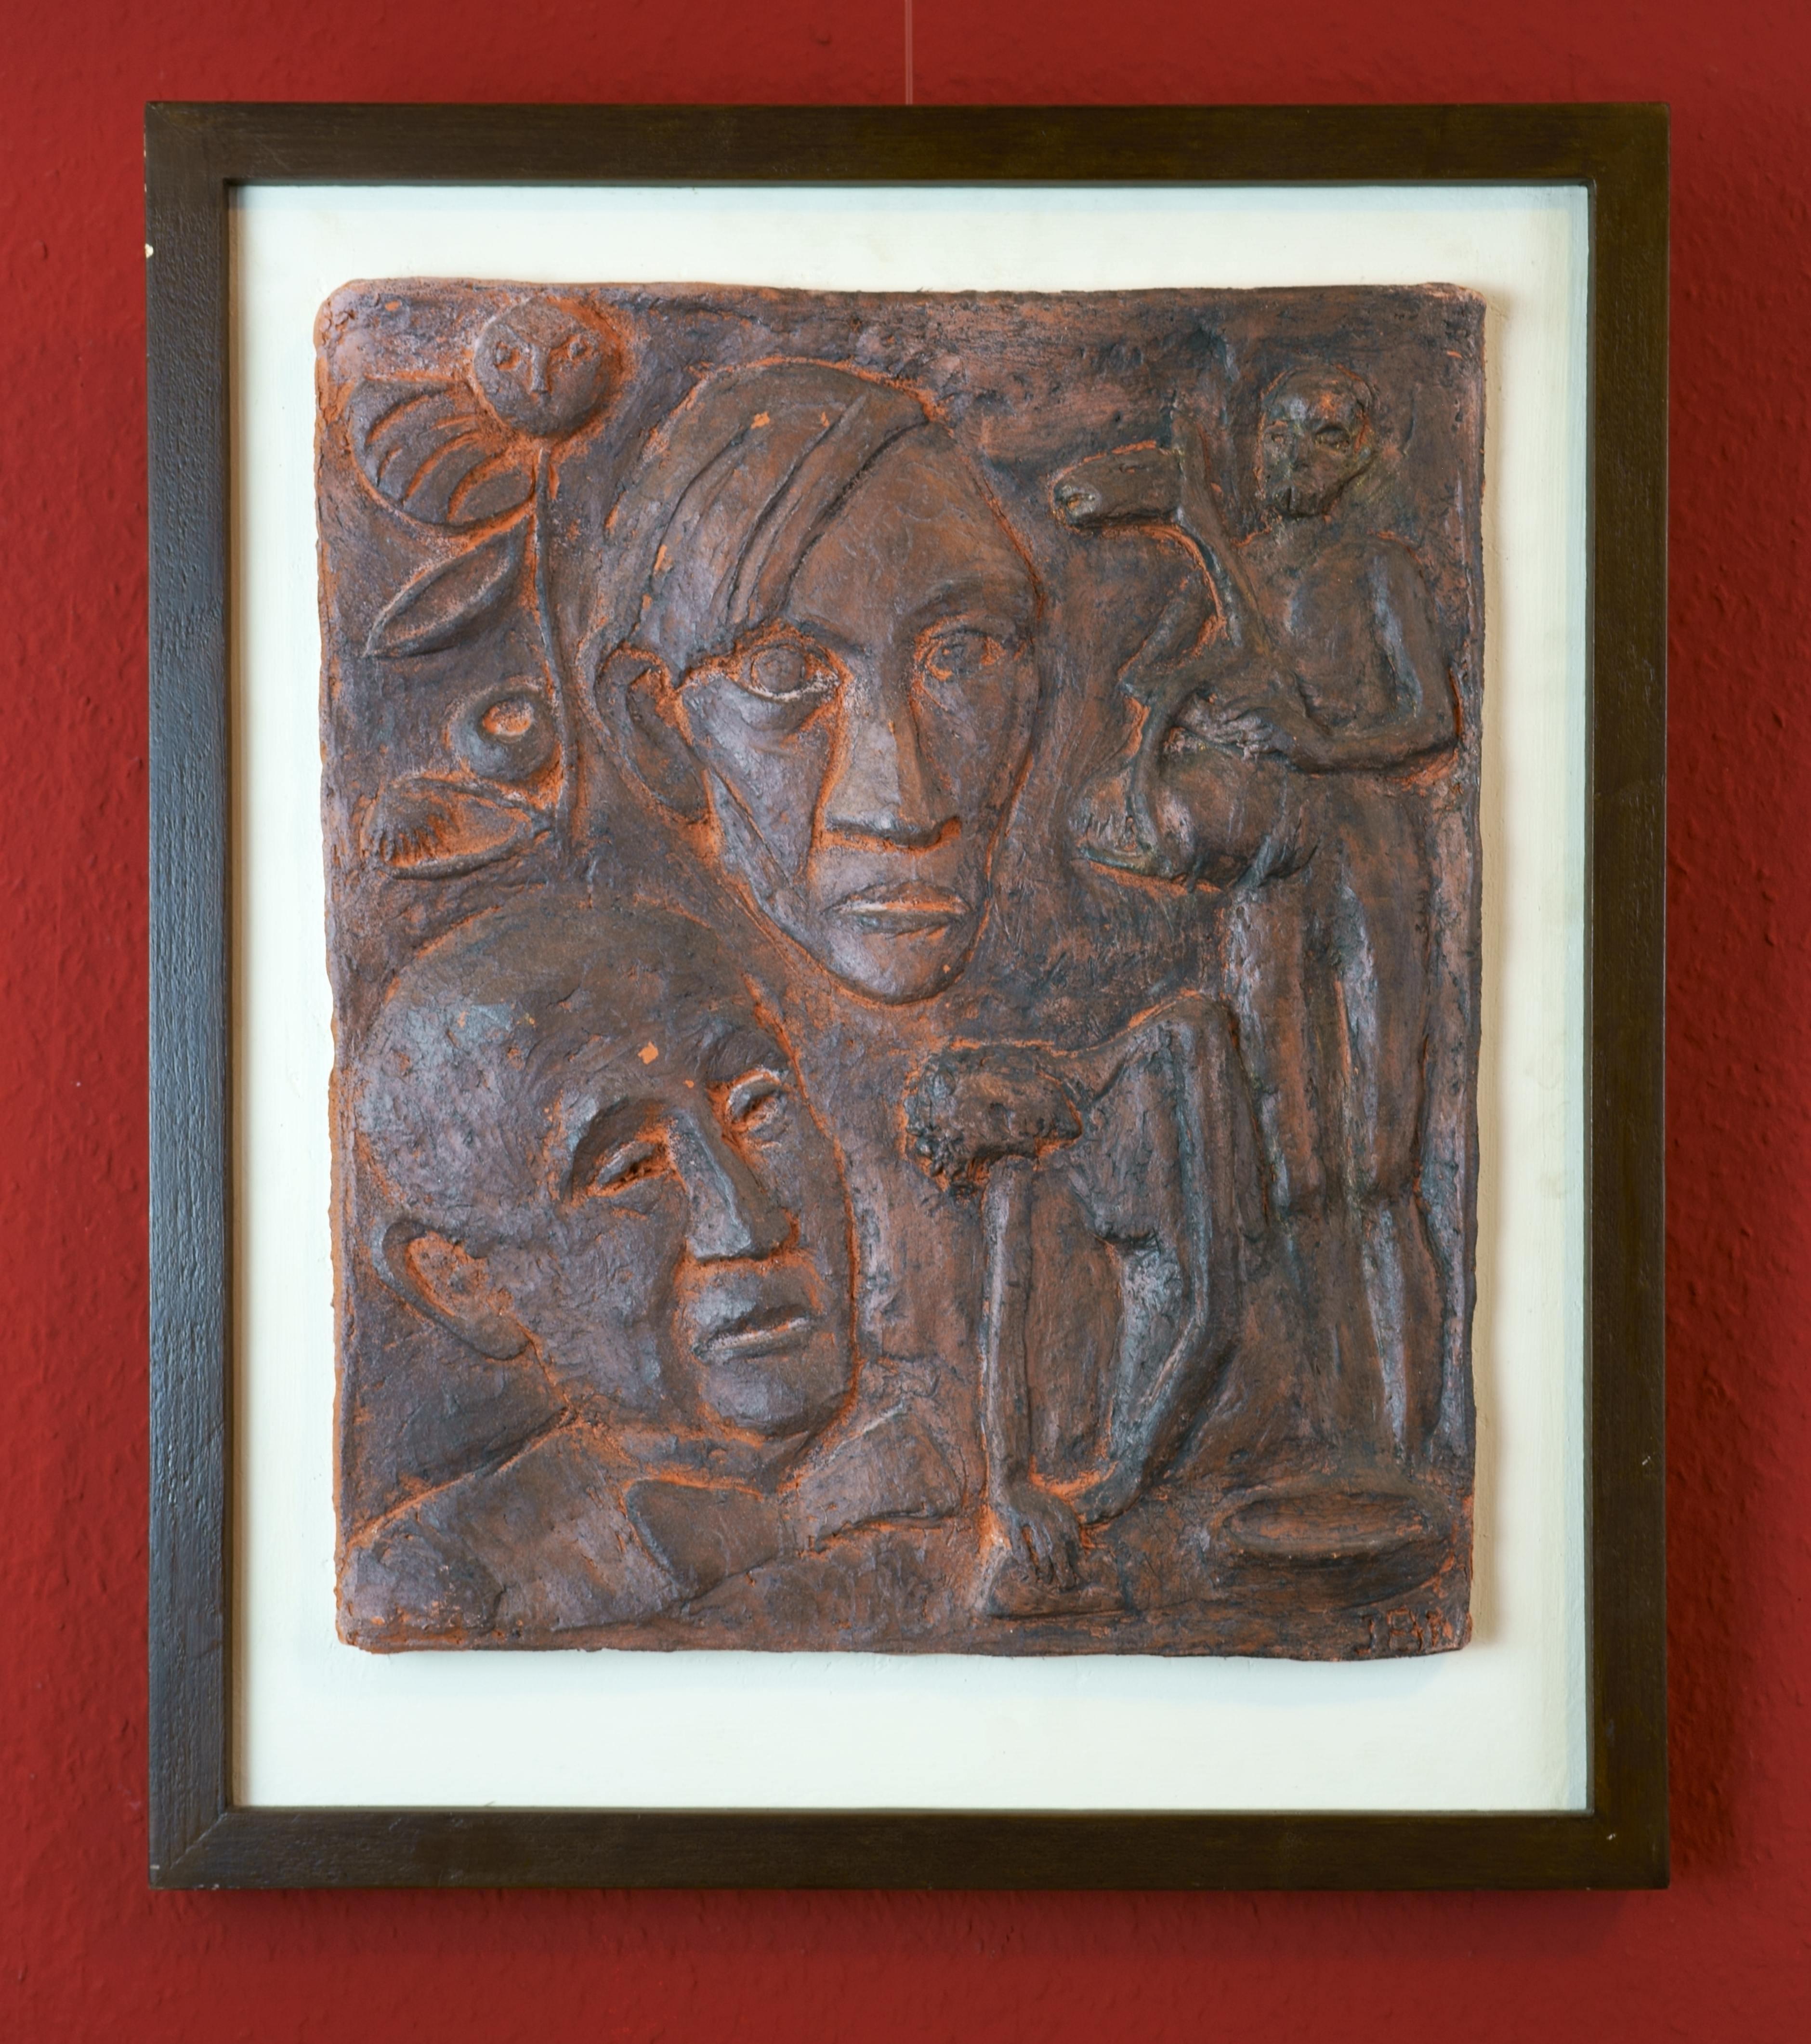 Irmgard Biernath (1905 Waldheim in Saxony - 1998 Mainz), Hommage à Kahnweiler, 1984. Terracotta relief, burnished red body, 43.5 x 38 cm, mounted on support plate, in wooden frame 57 x 49.5 cm, monogrammed 